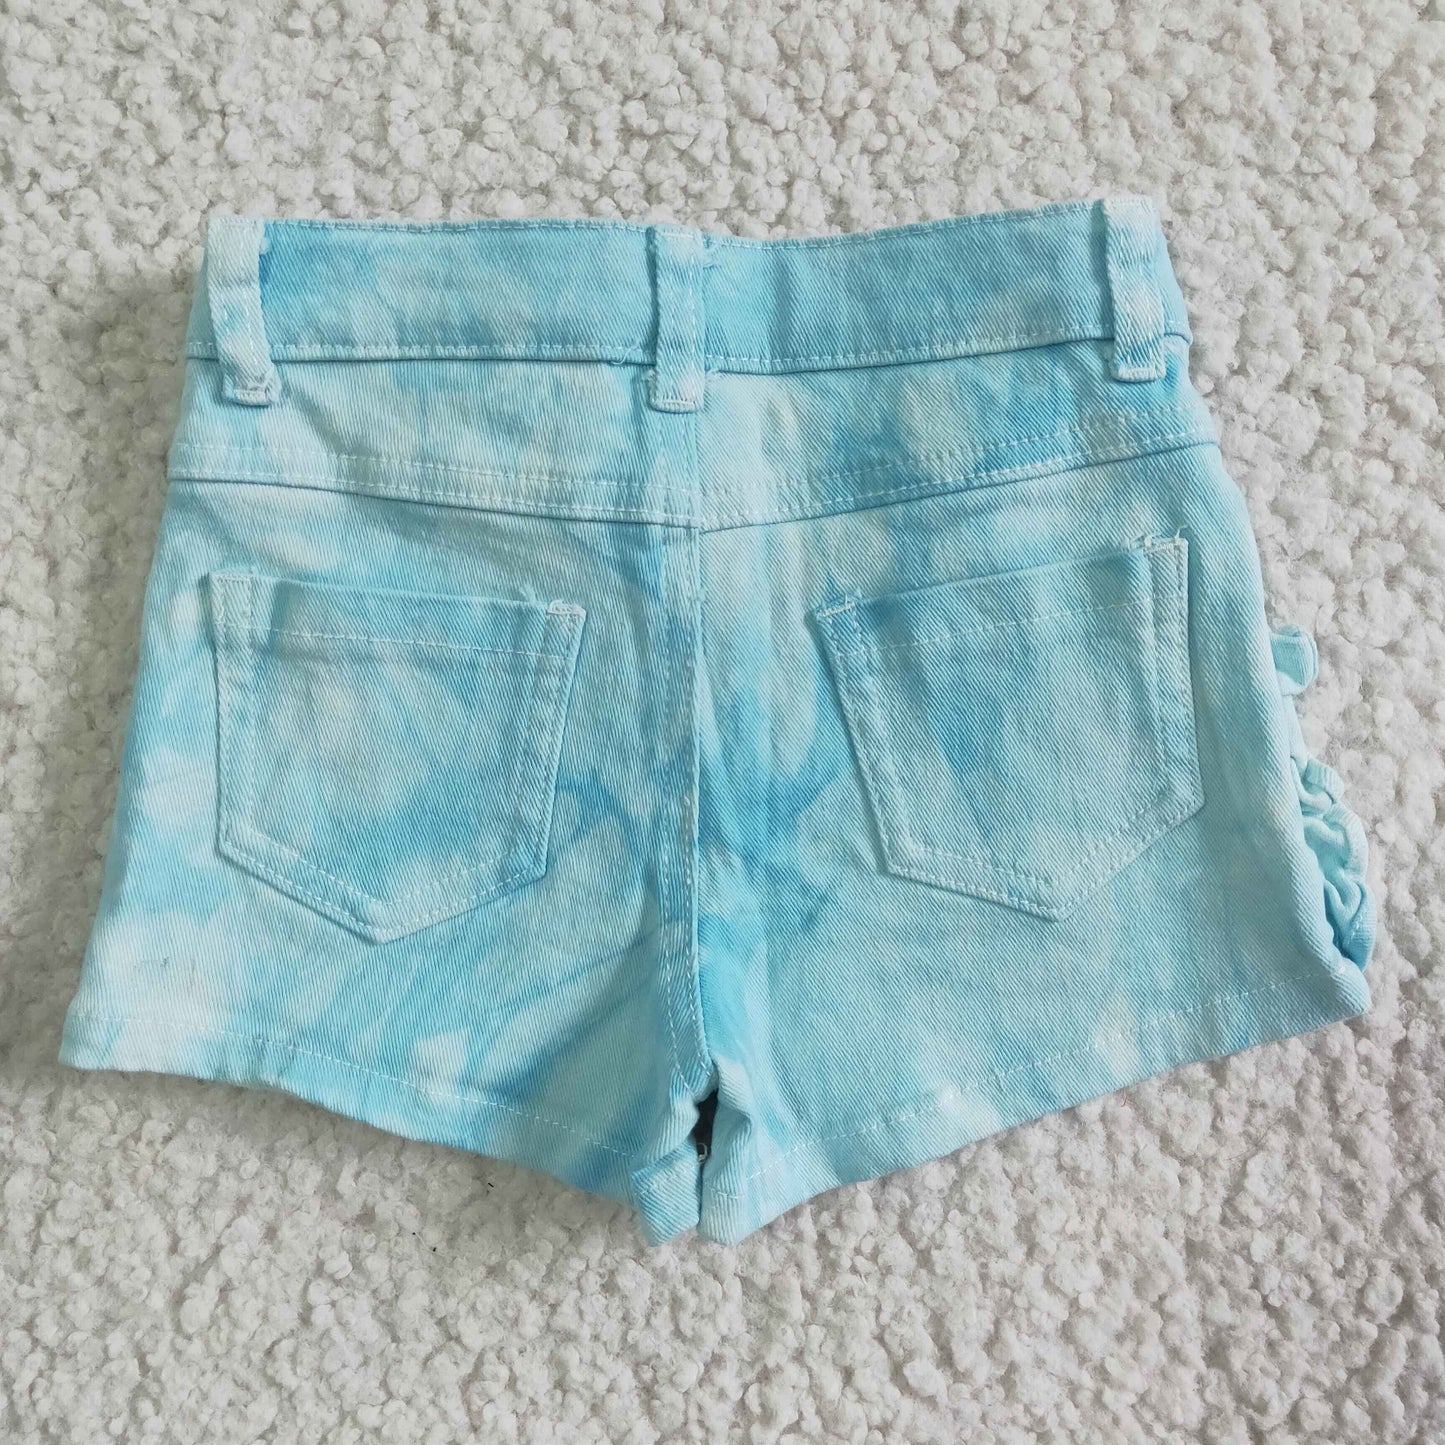 Light blue elastic waistband jeans baby girls denim shorts